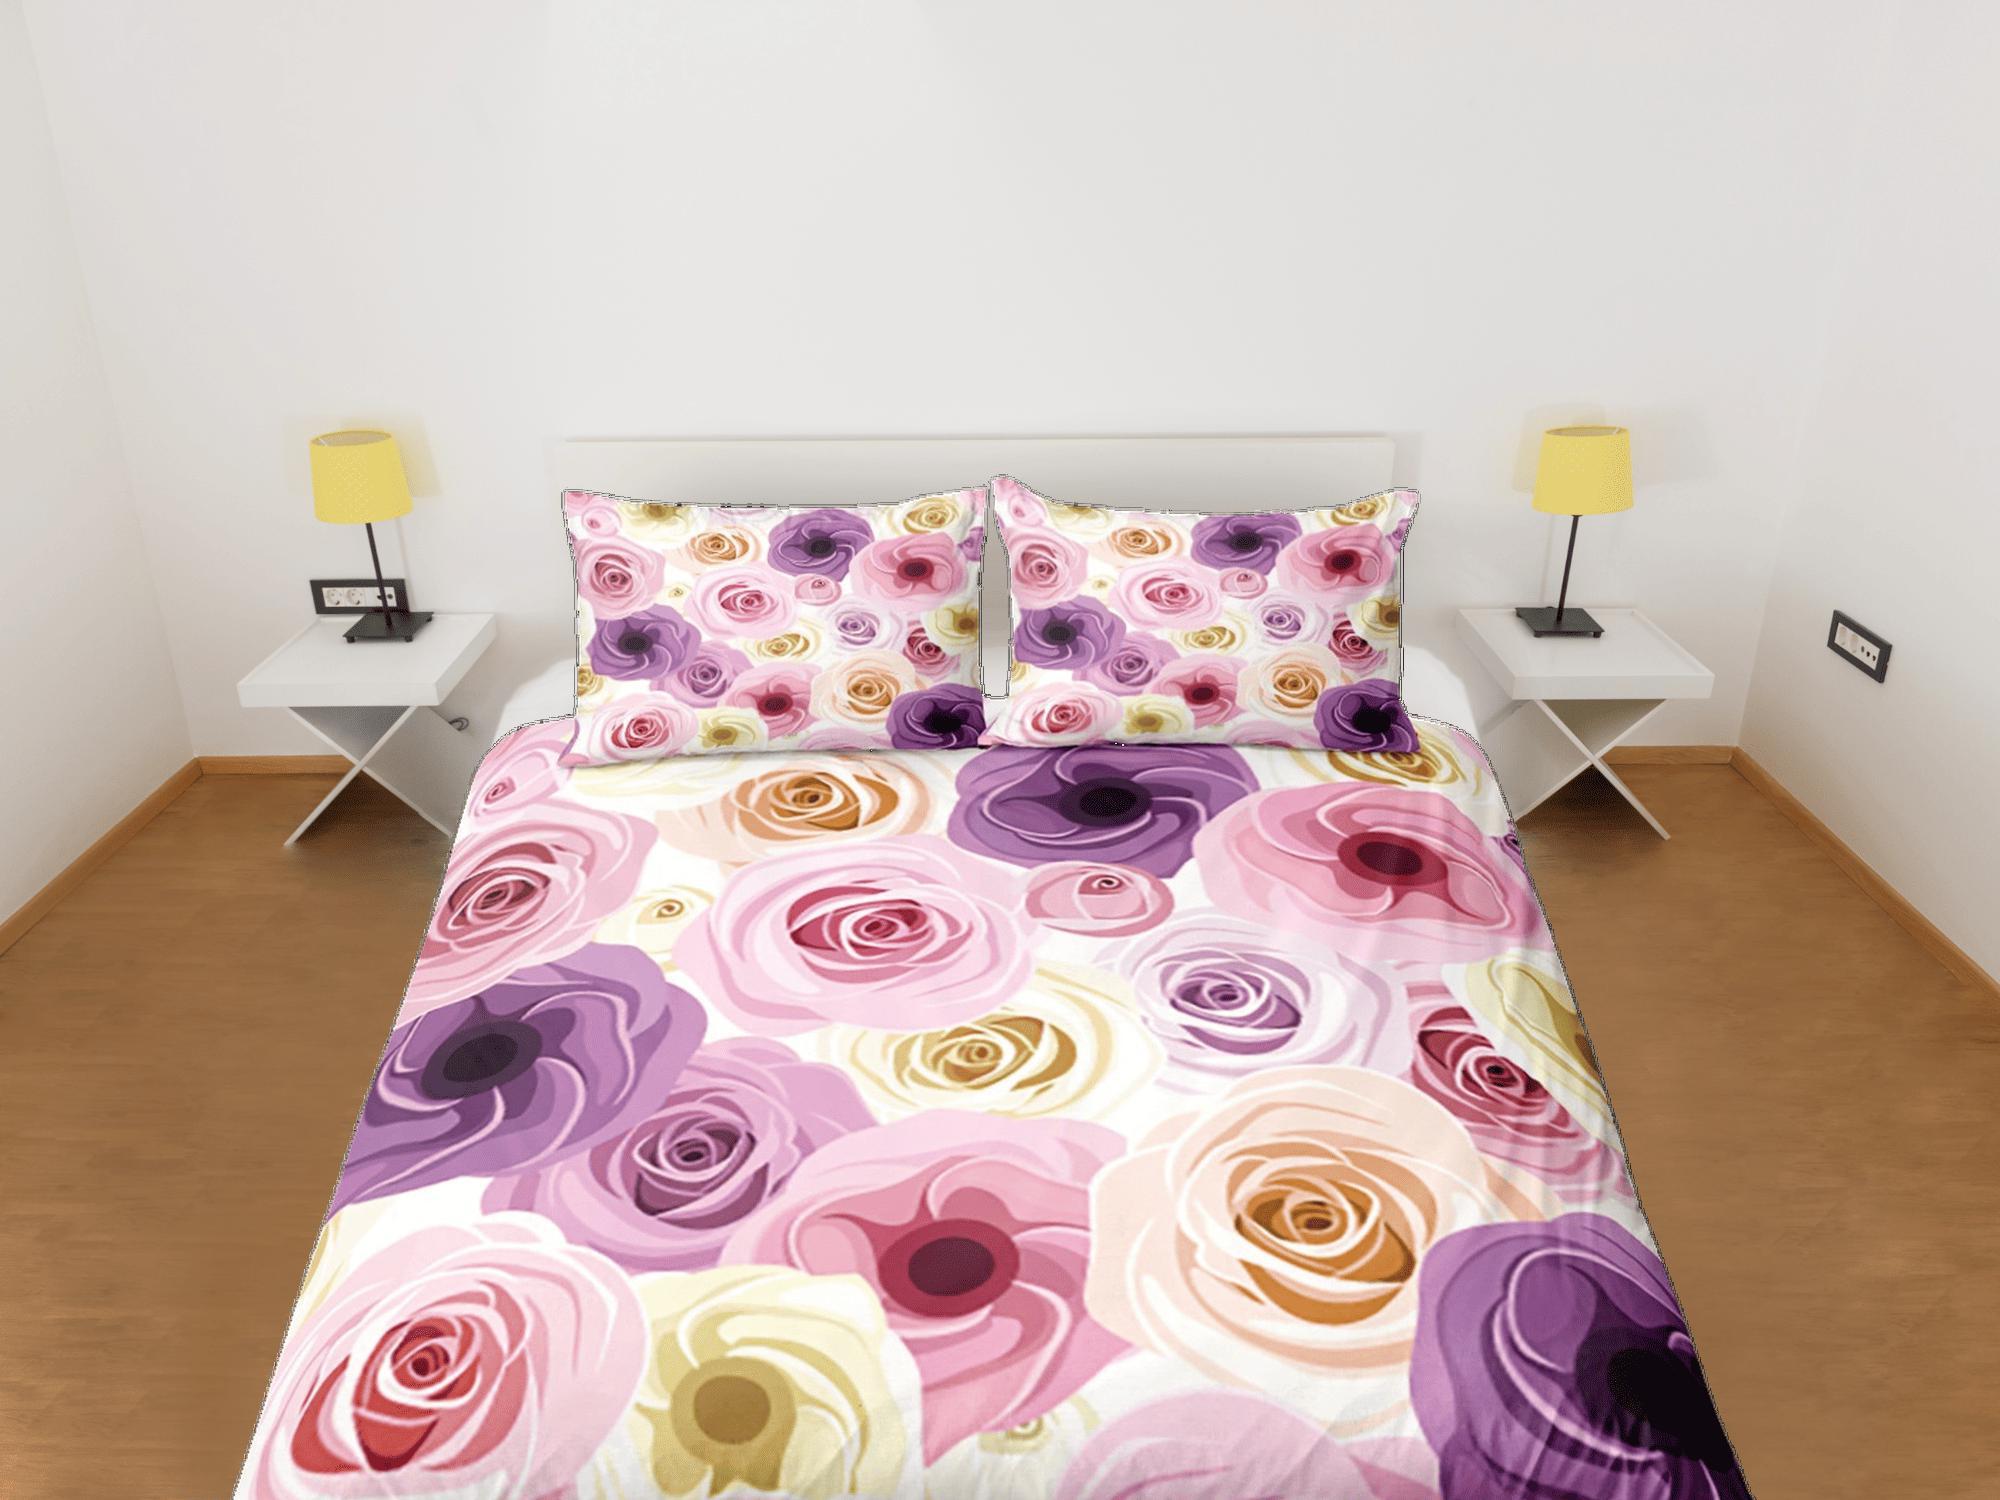 daintyduvet Pink Roses Duvet Cover Set Colorful Bedspread, Floral Girly Dorm Bedding Pillowcase